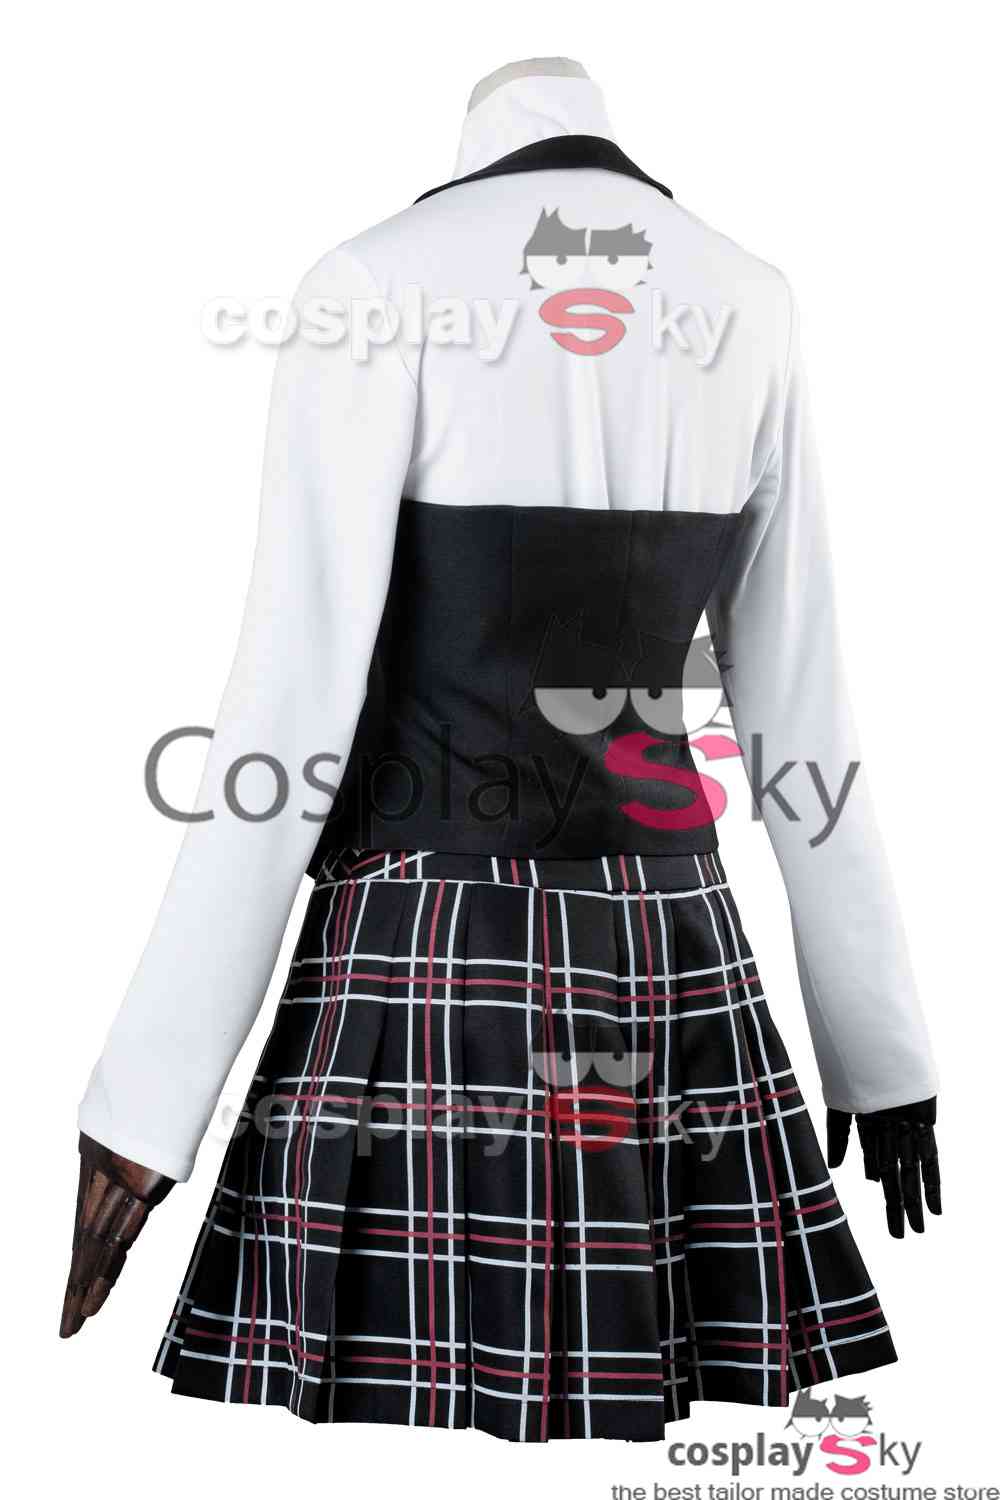 Persona 5 P5 Makoto Niijima Queen Uniform Schuluniform Cosplay Kostüm